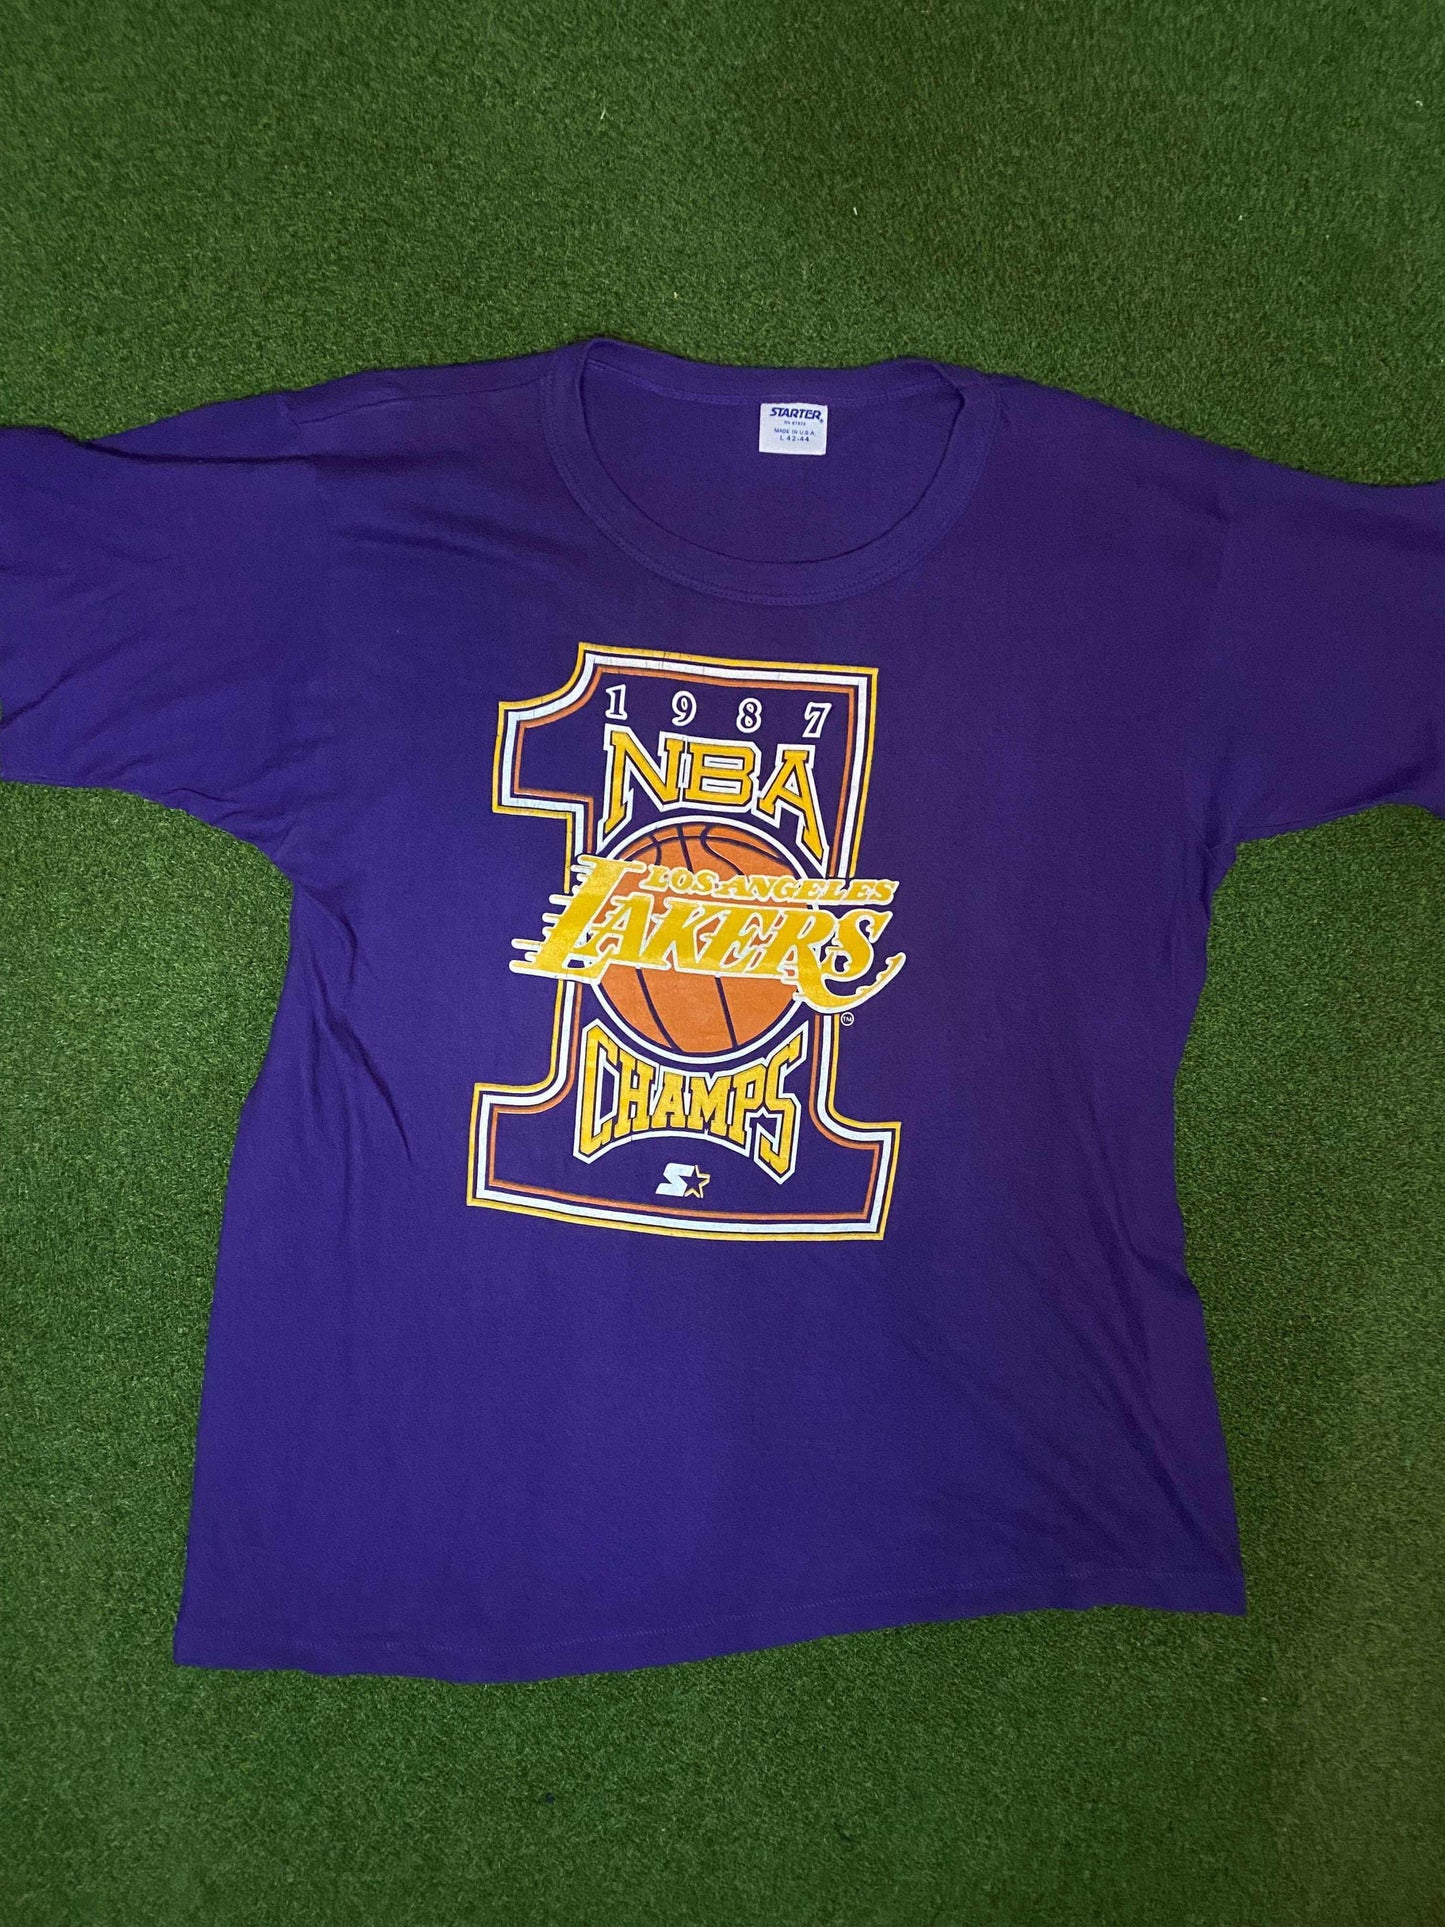 1987 Los Angeles Lakers - NBA Champs - Vintage NBA Tee Shirt (Large) - Gametime Vintage